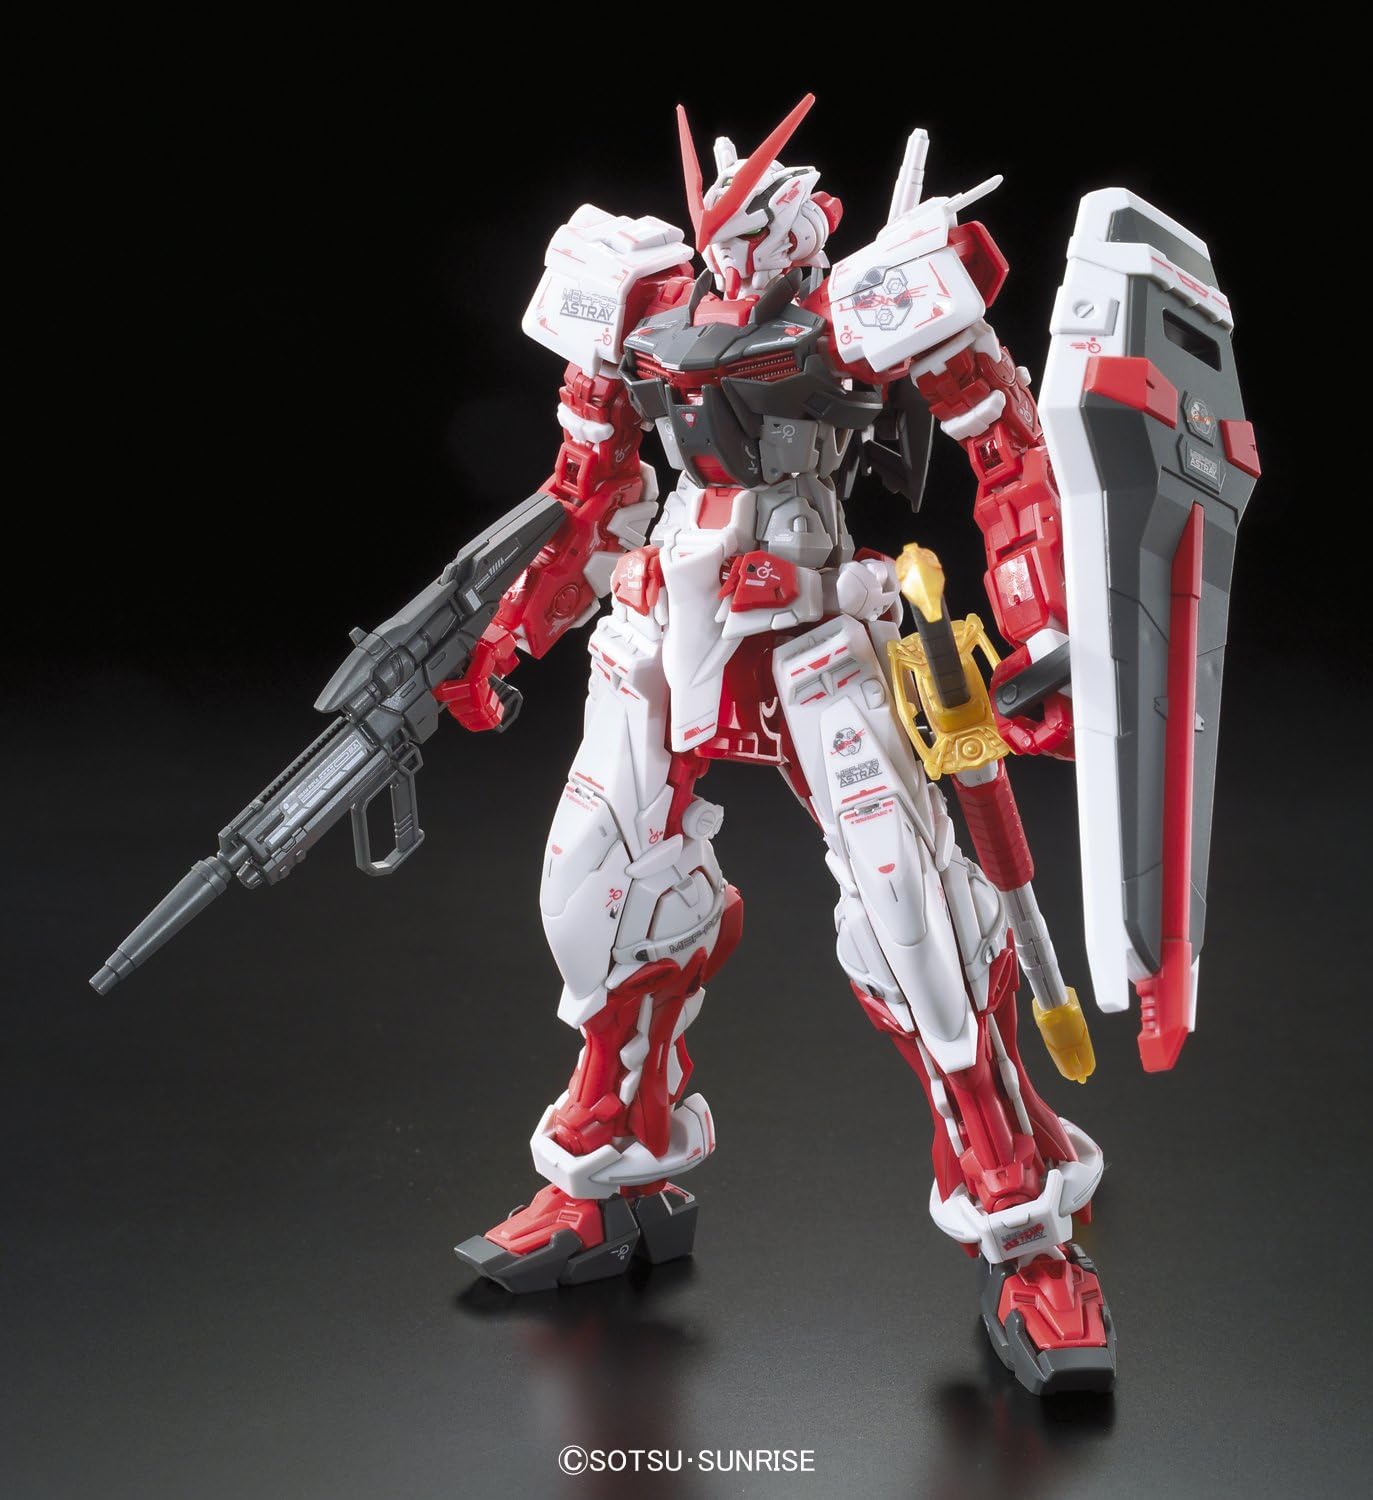 1/144 RG Gundam Astray Red Frame | animota